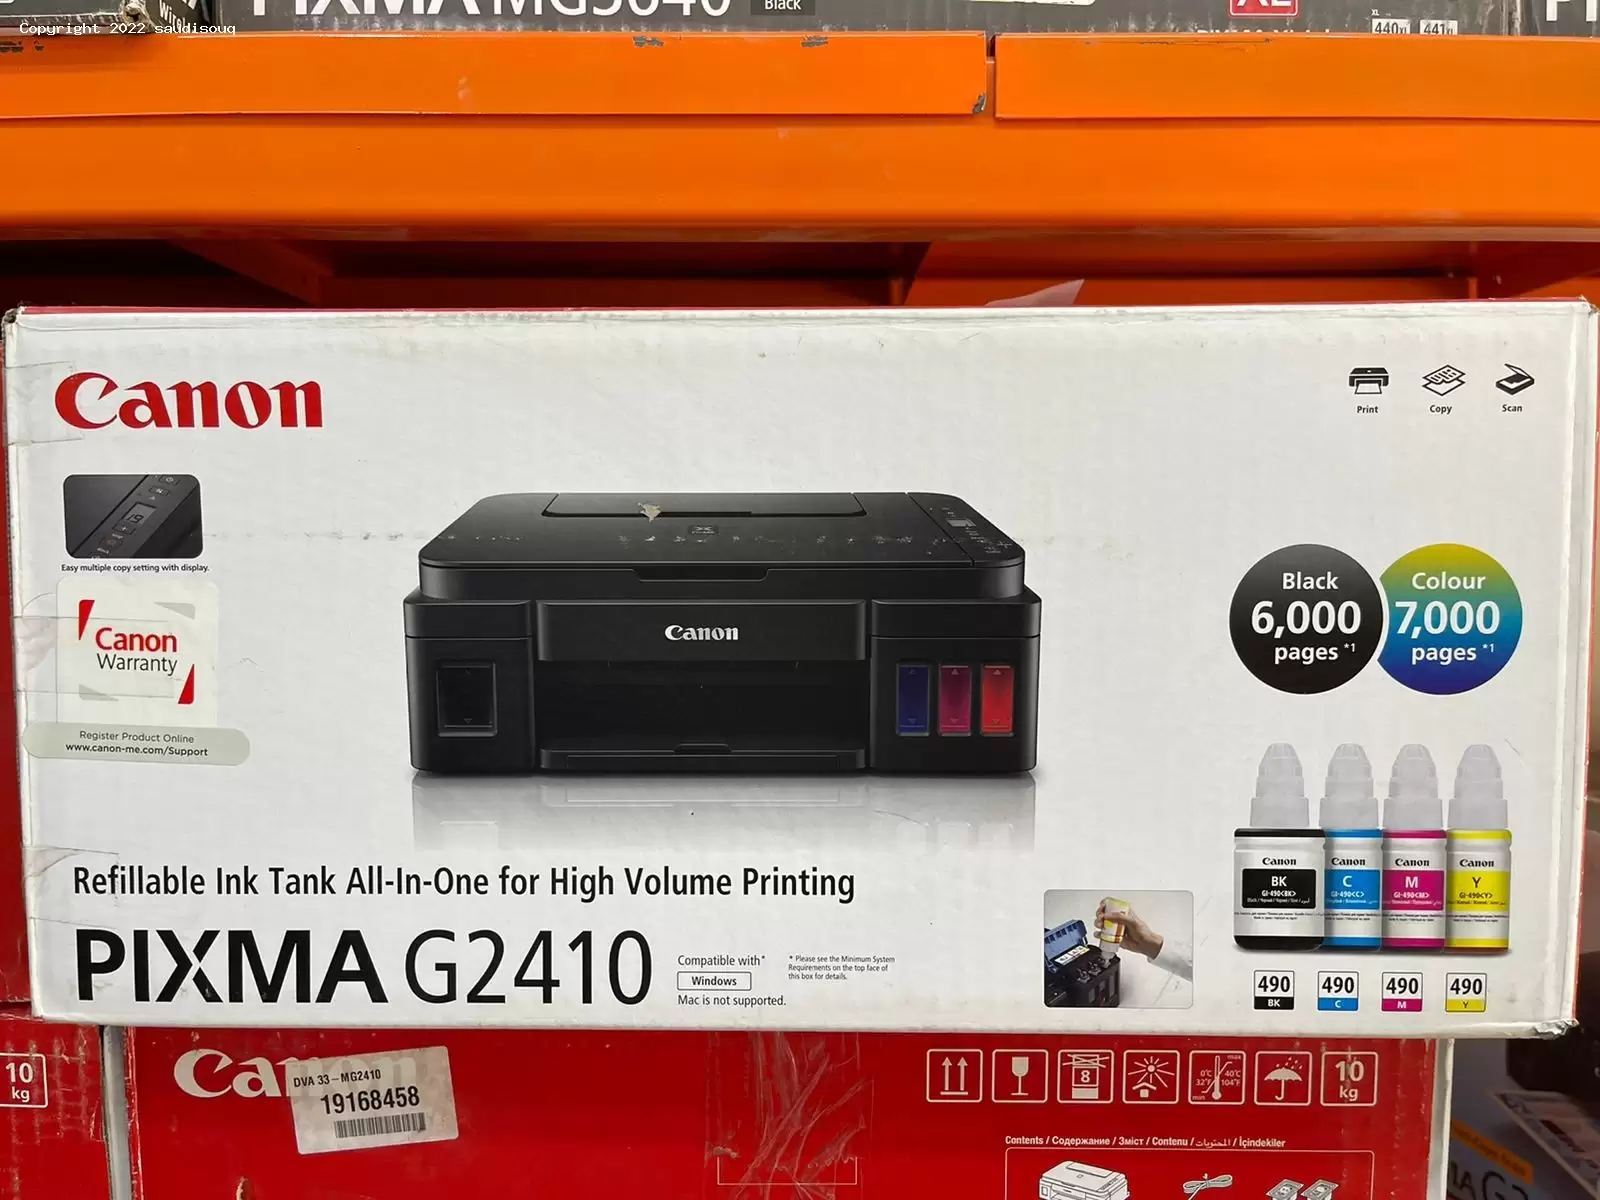 Canon Pixma G2410 Multifunctional Printer Rangi Mbili (Black&Colour) Colour Page 7000,Black Page12000